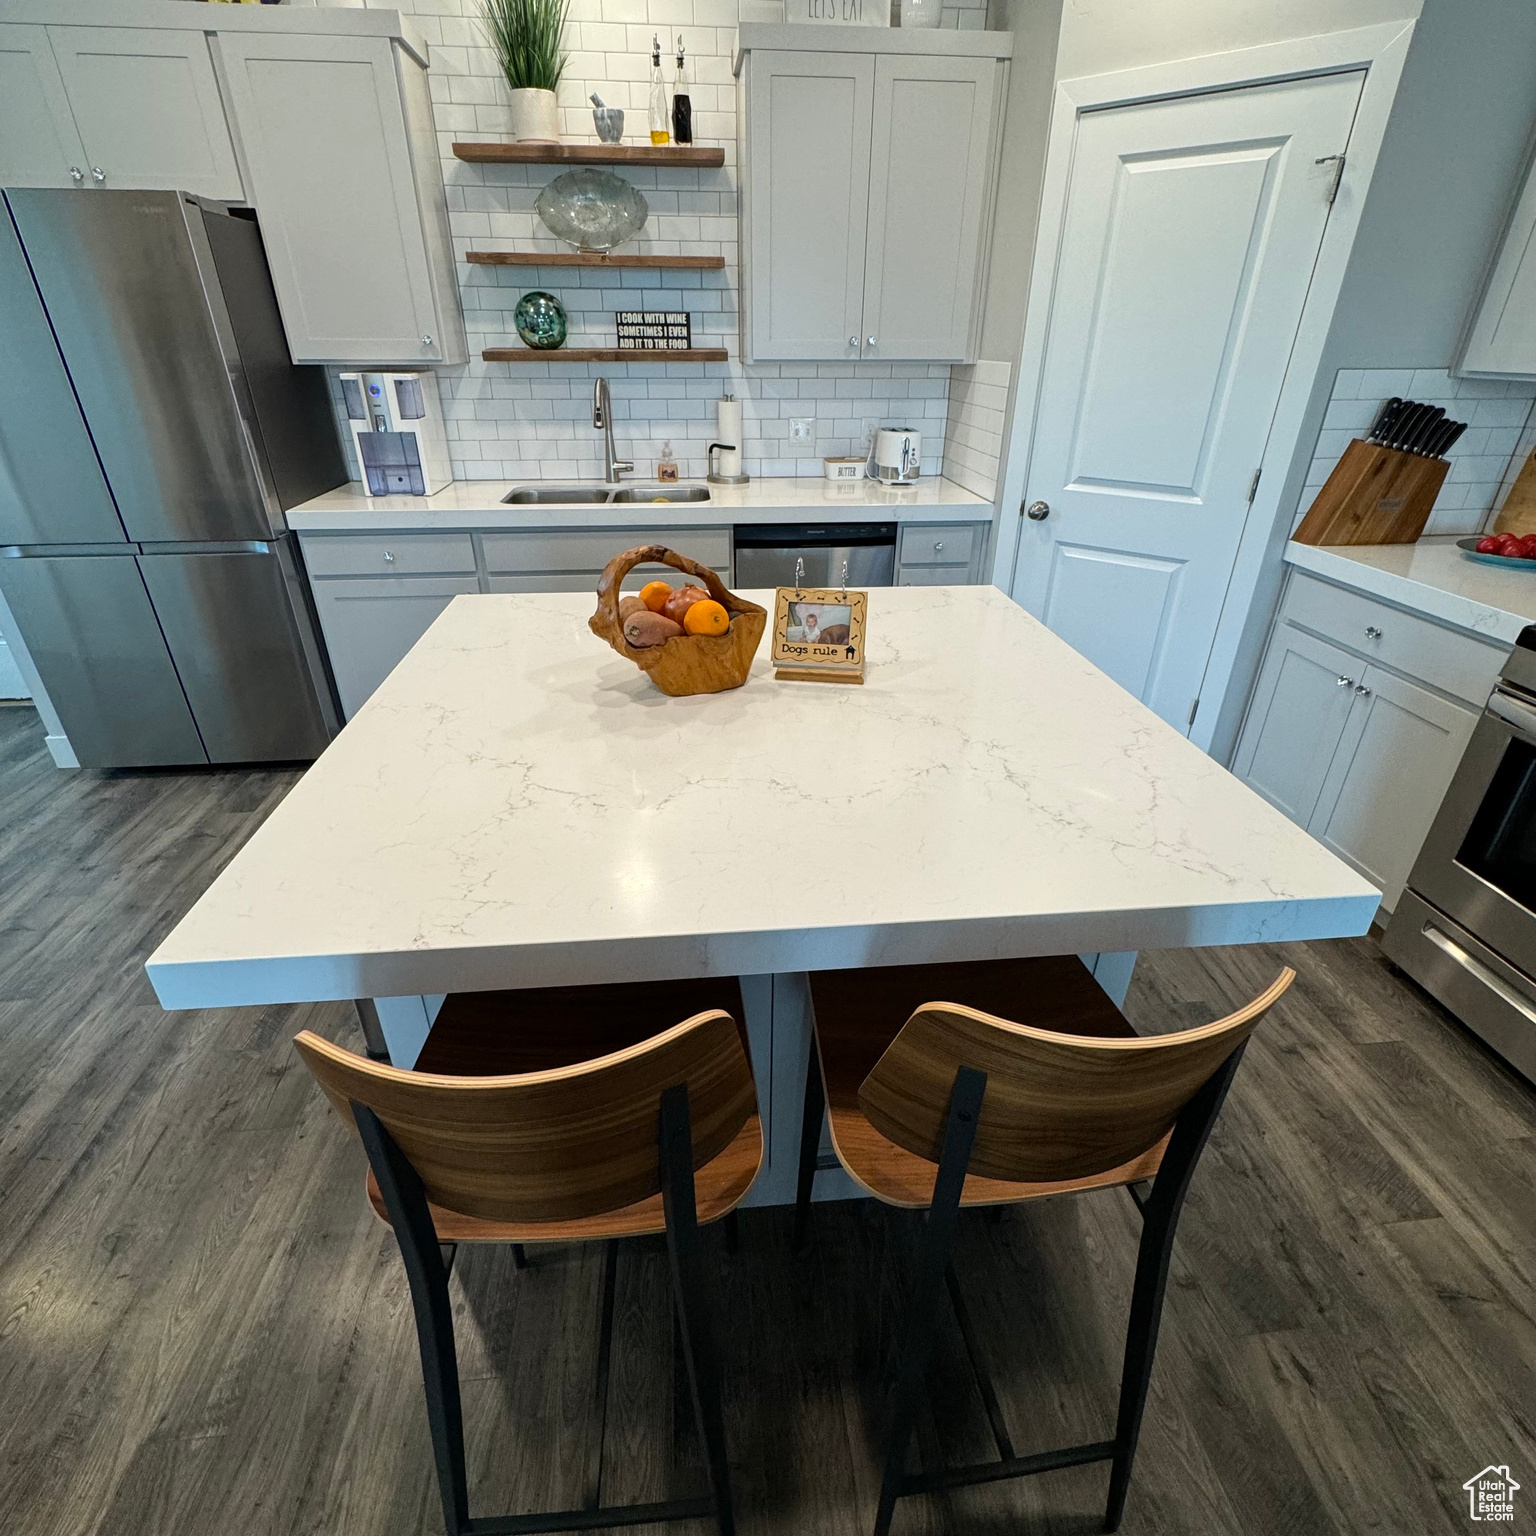 Kitchen featuring appliances with stainless steel finishes, tasteful backsplash, dark hardwood / wood-style flooring, and sink